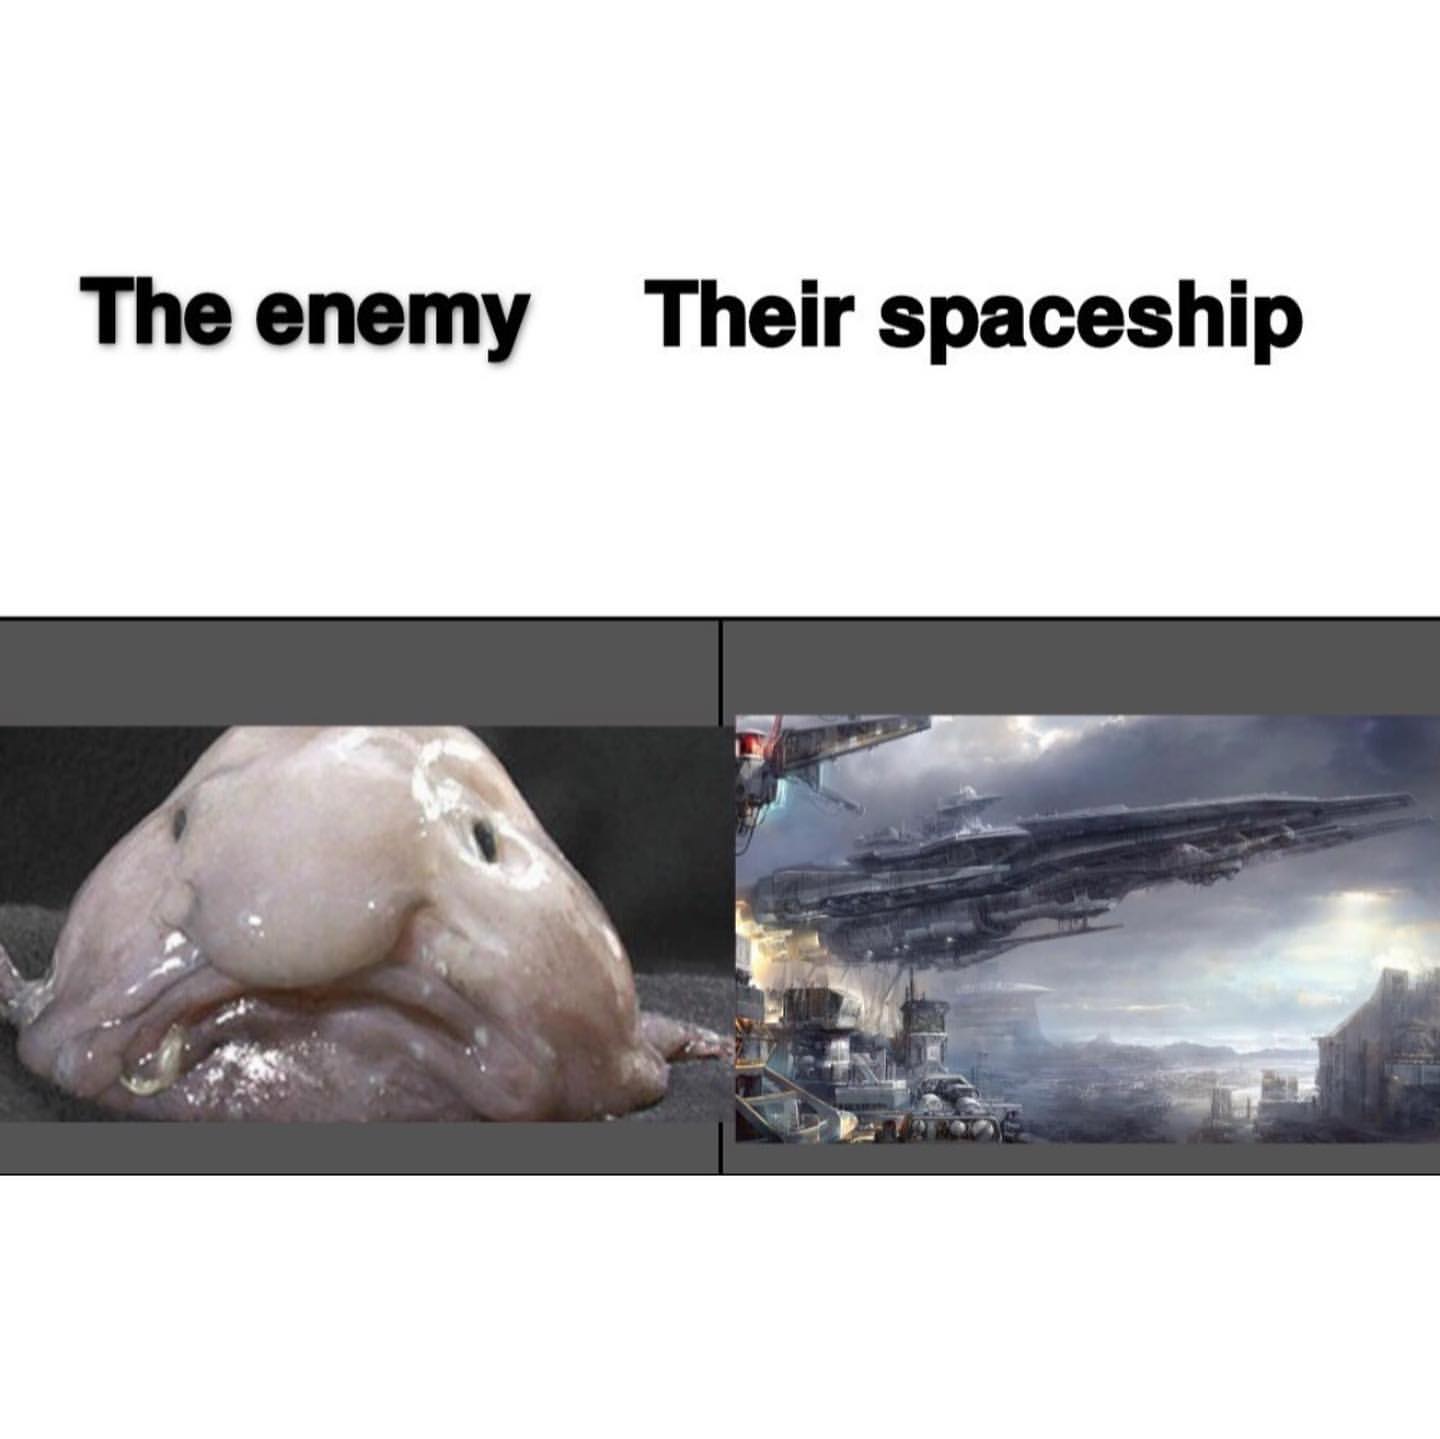 The enemy. Their spaceship.